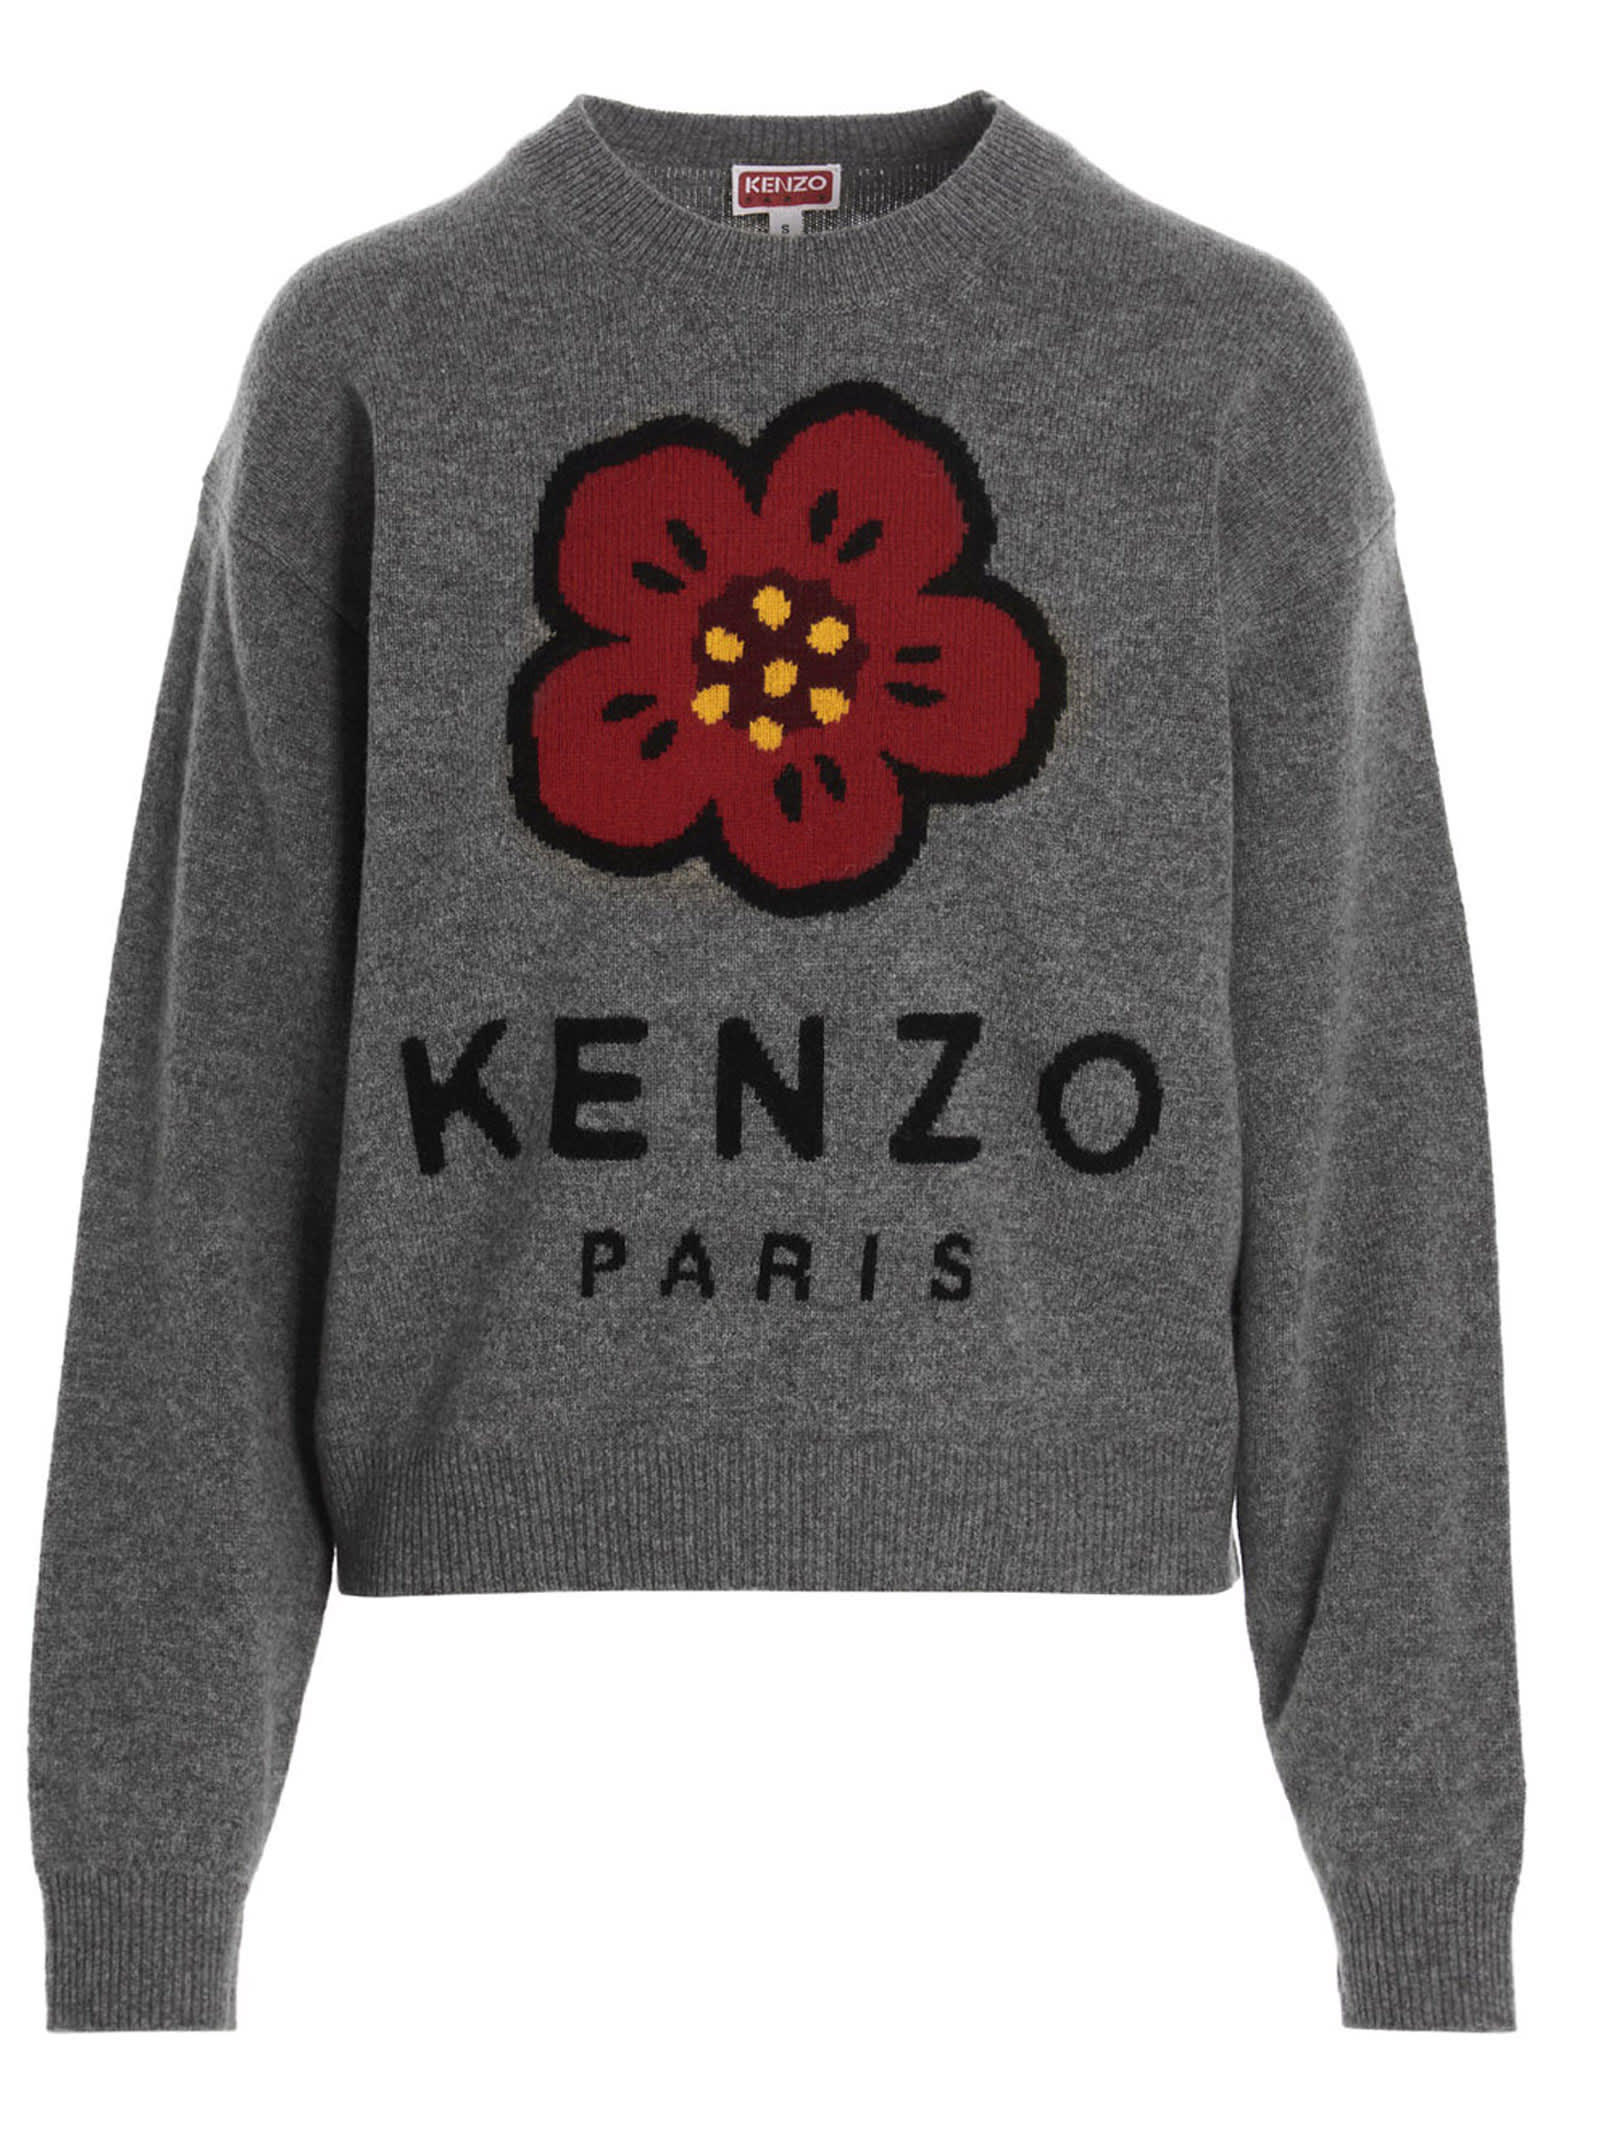 Kenzo paris Sweater